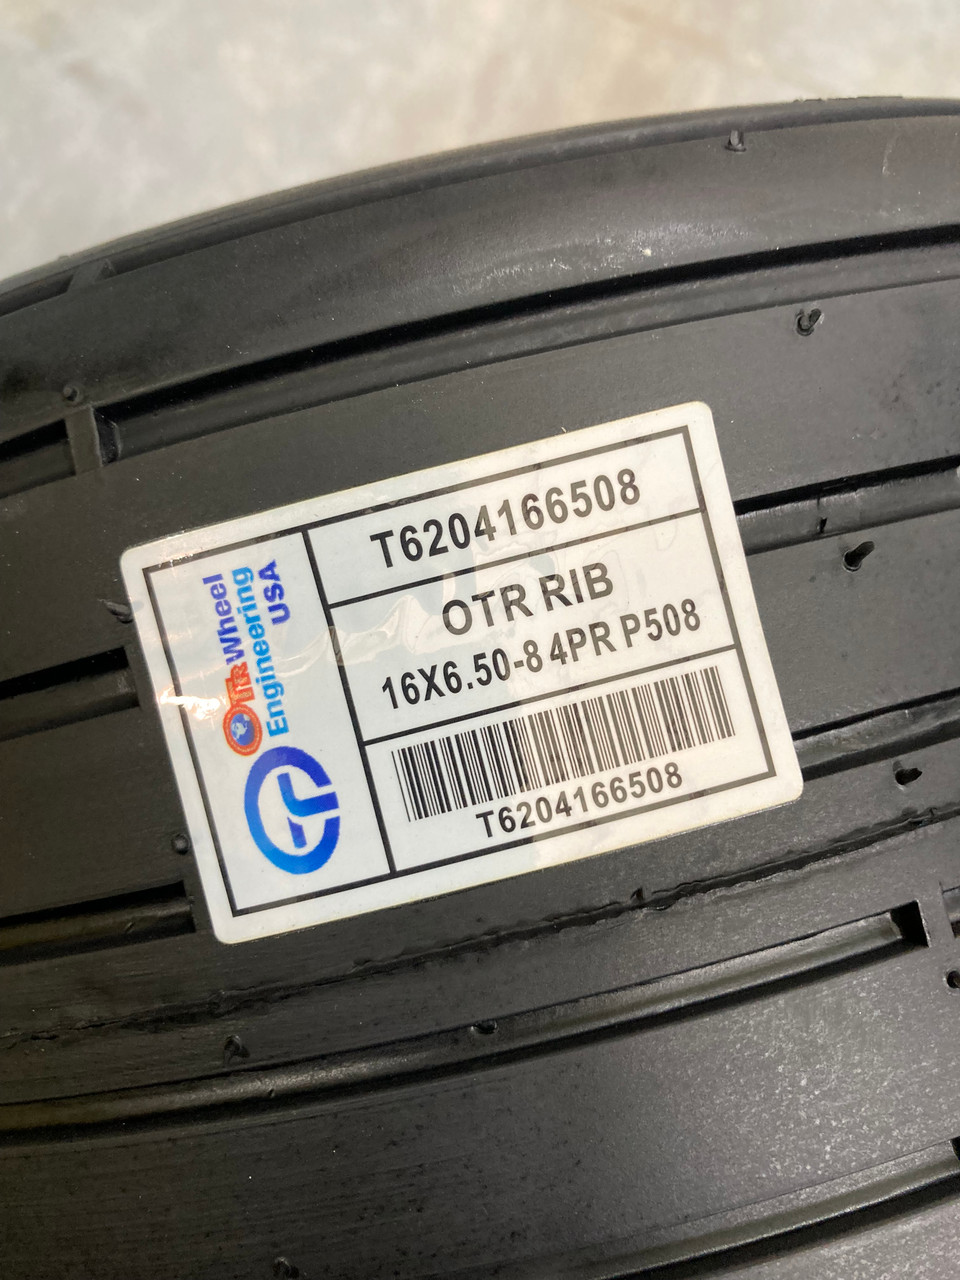 New Tire 16 6.50 8 OTR RIB 4 ply Lawn & Garden 16x6.50-8